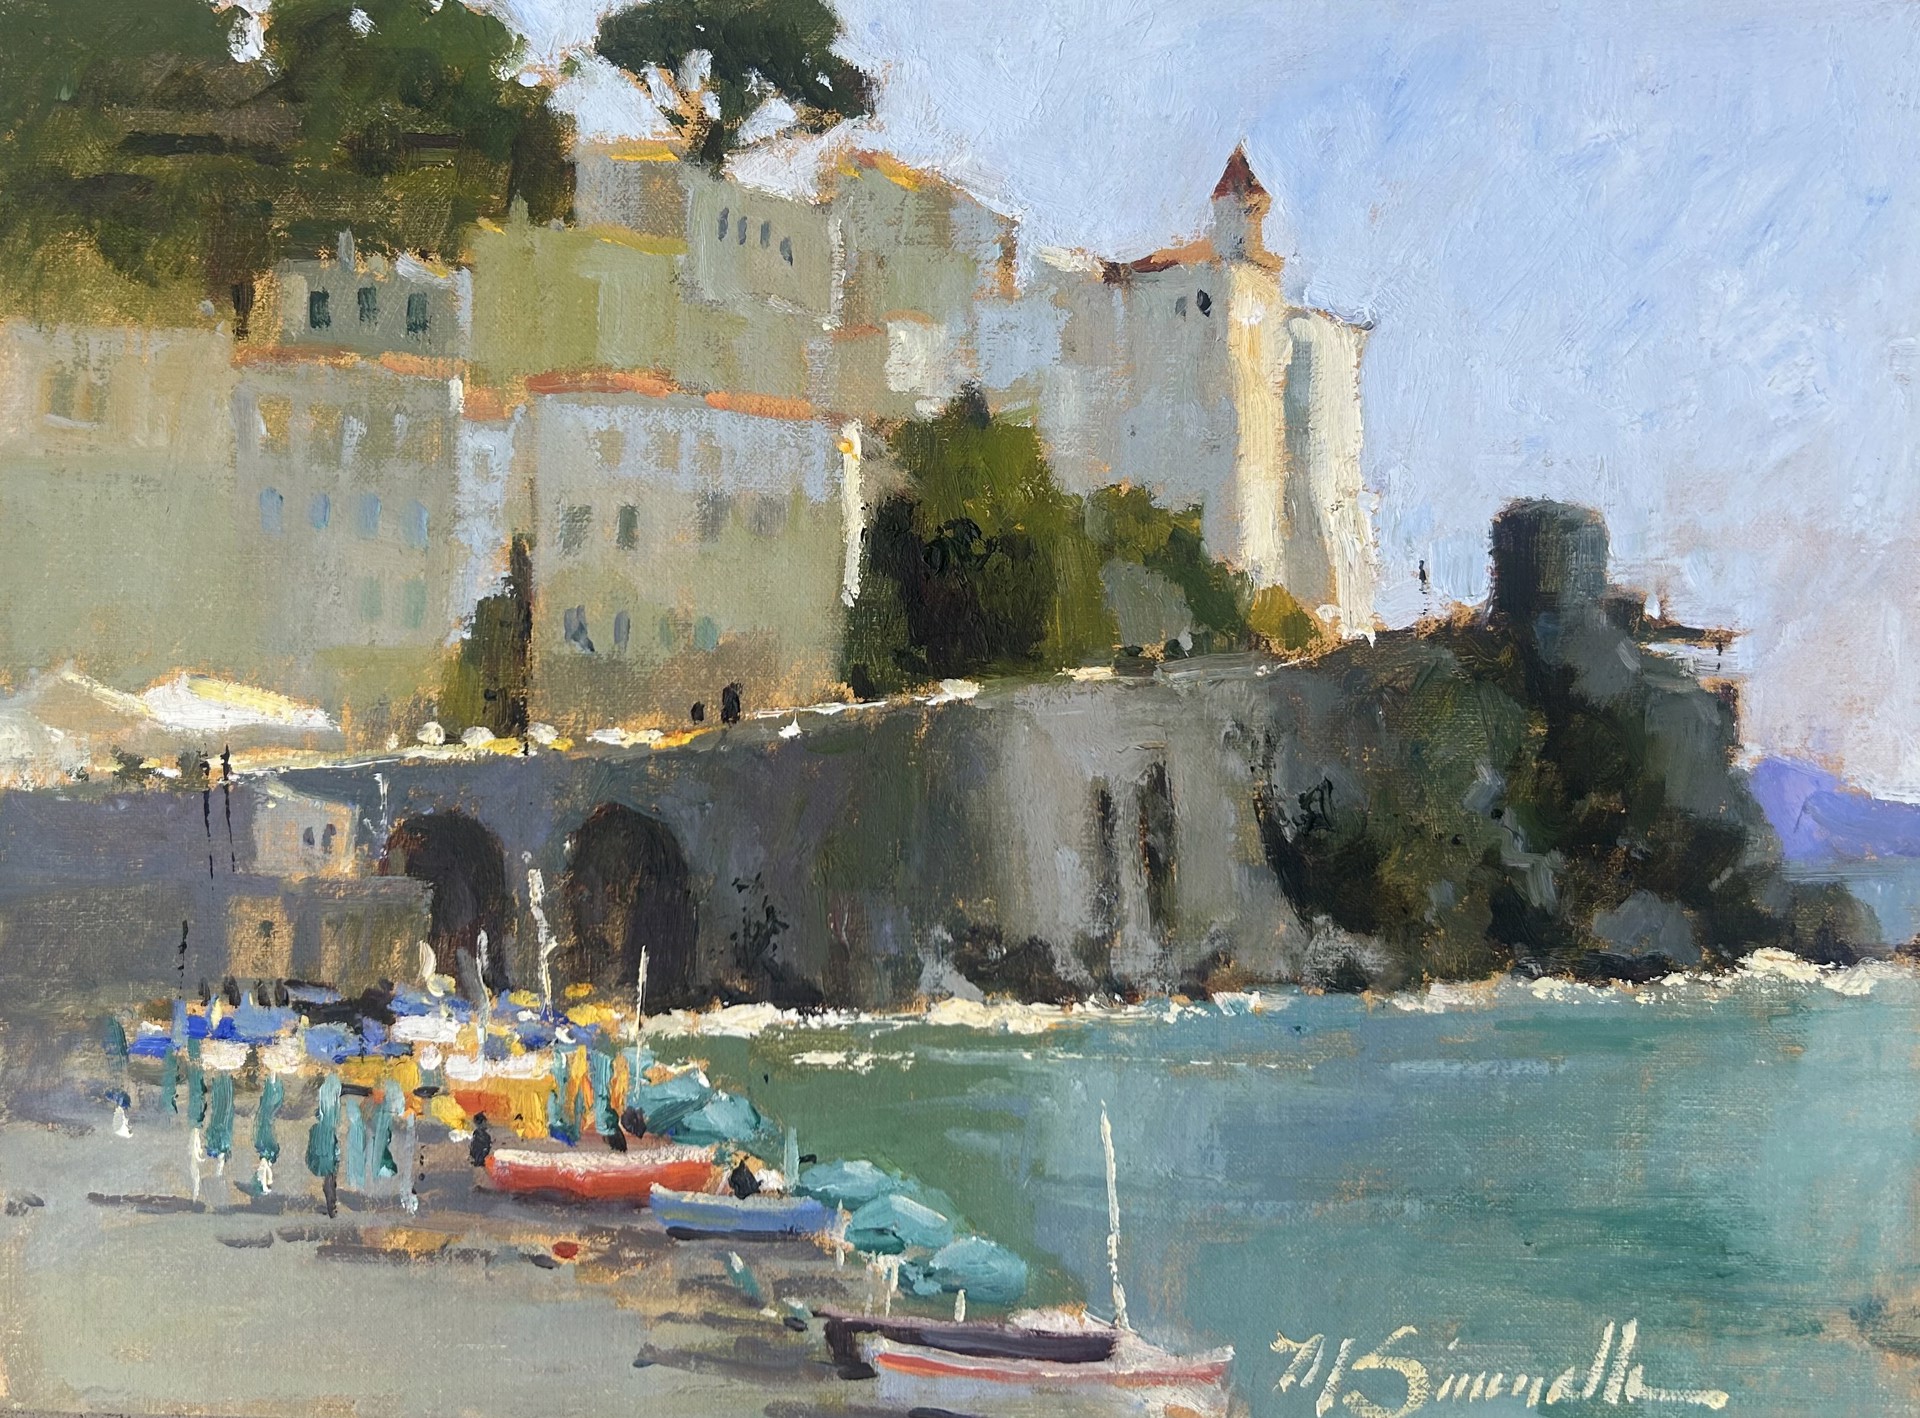 Amalfi by Marilyn Simandle